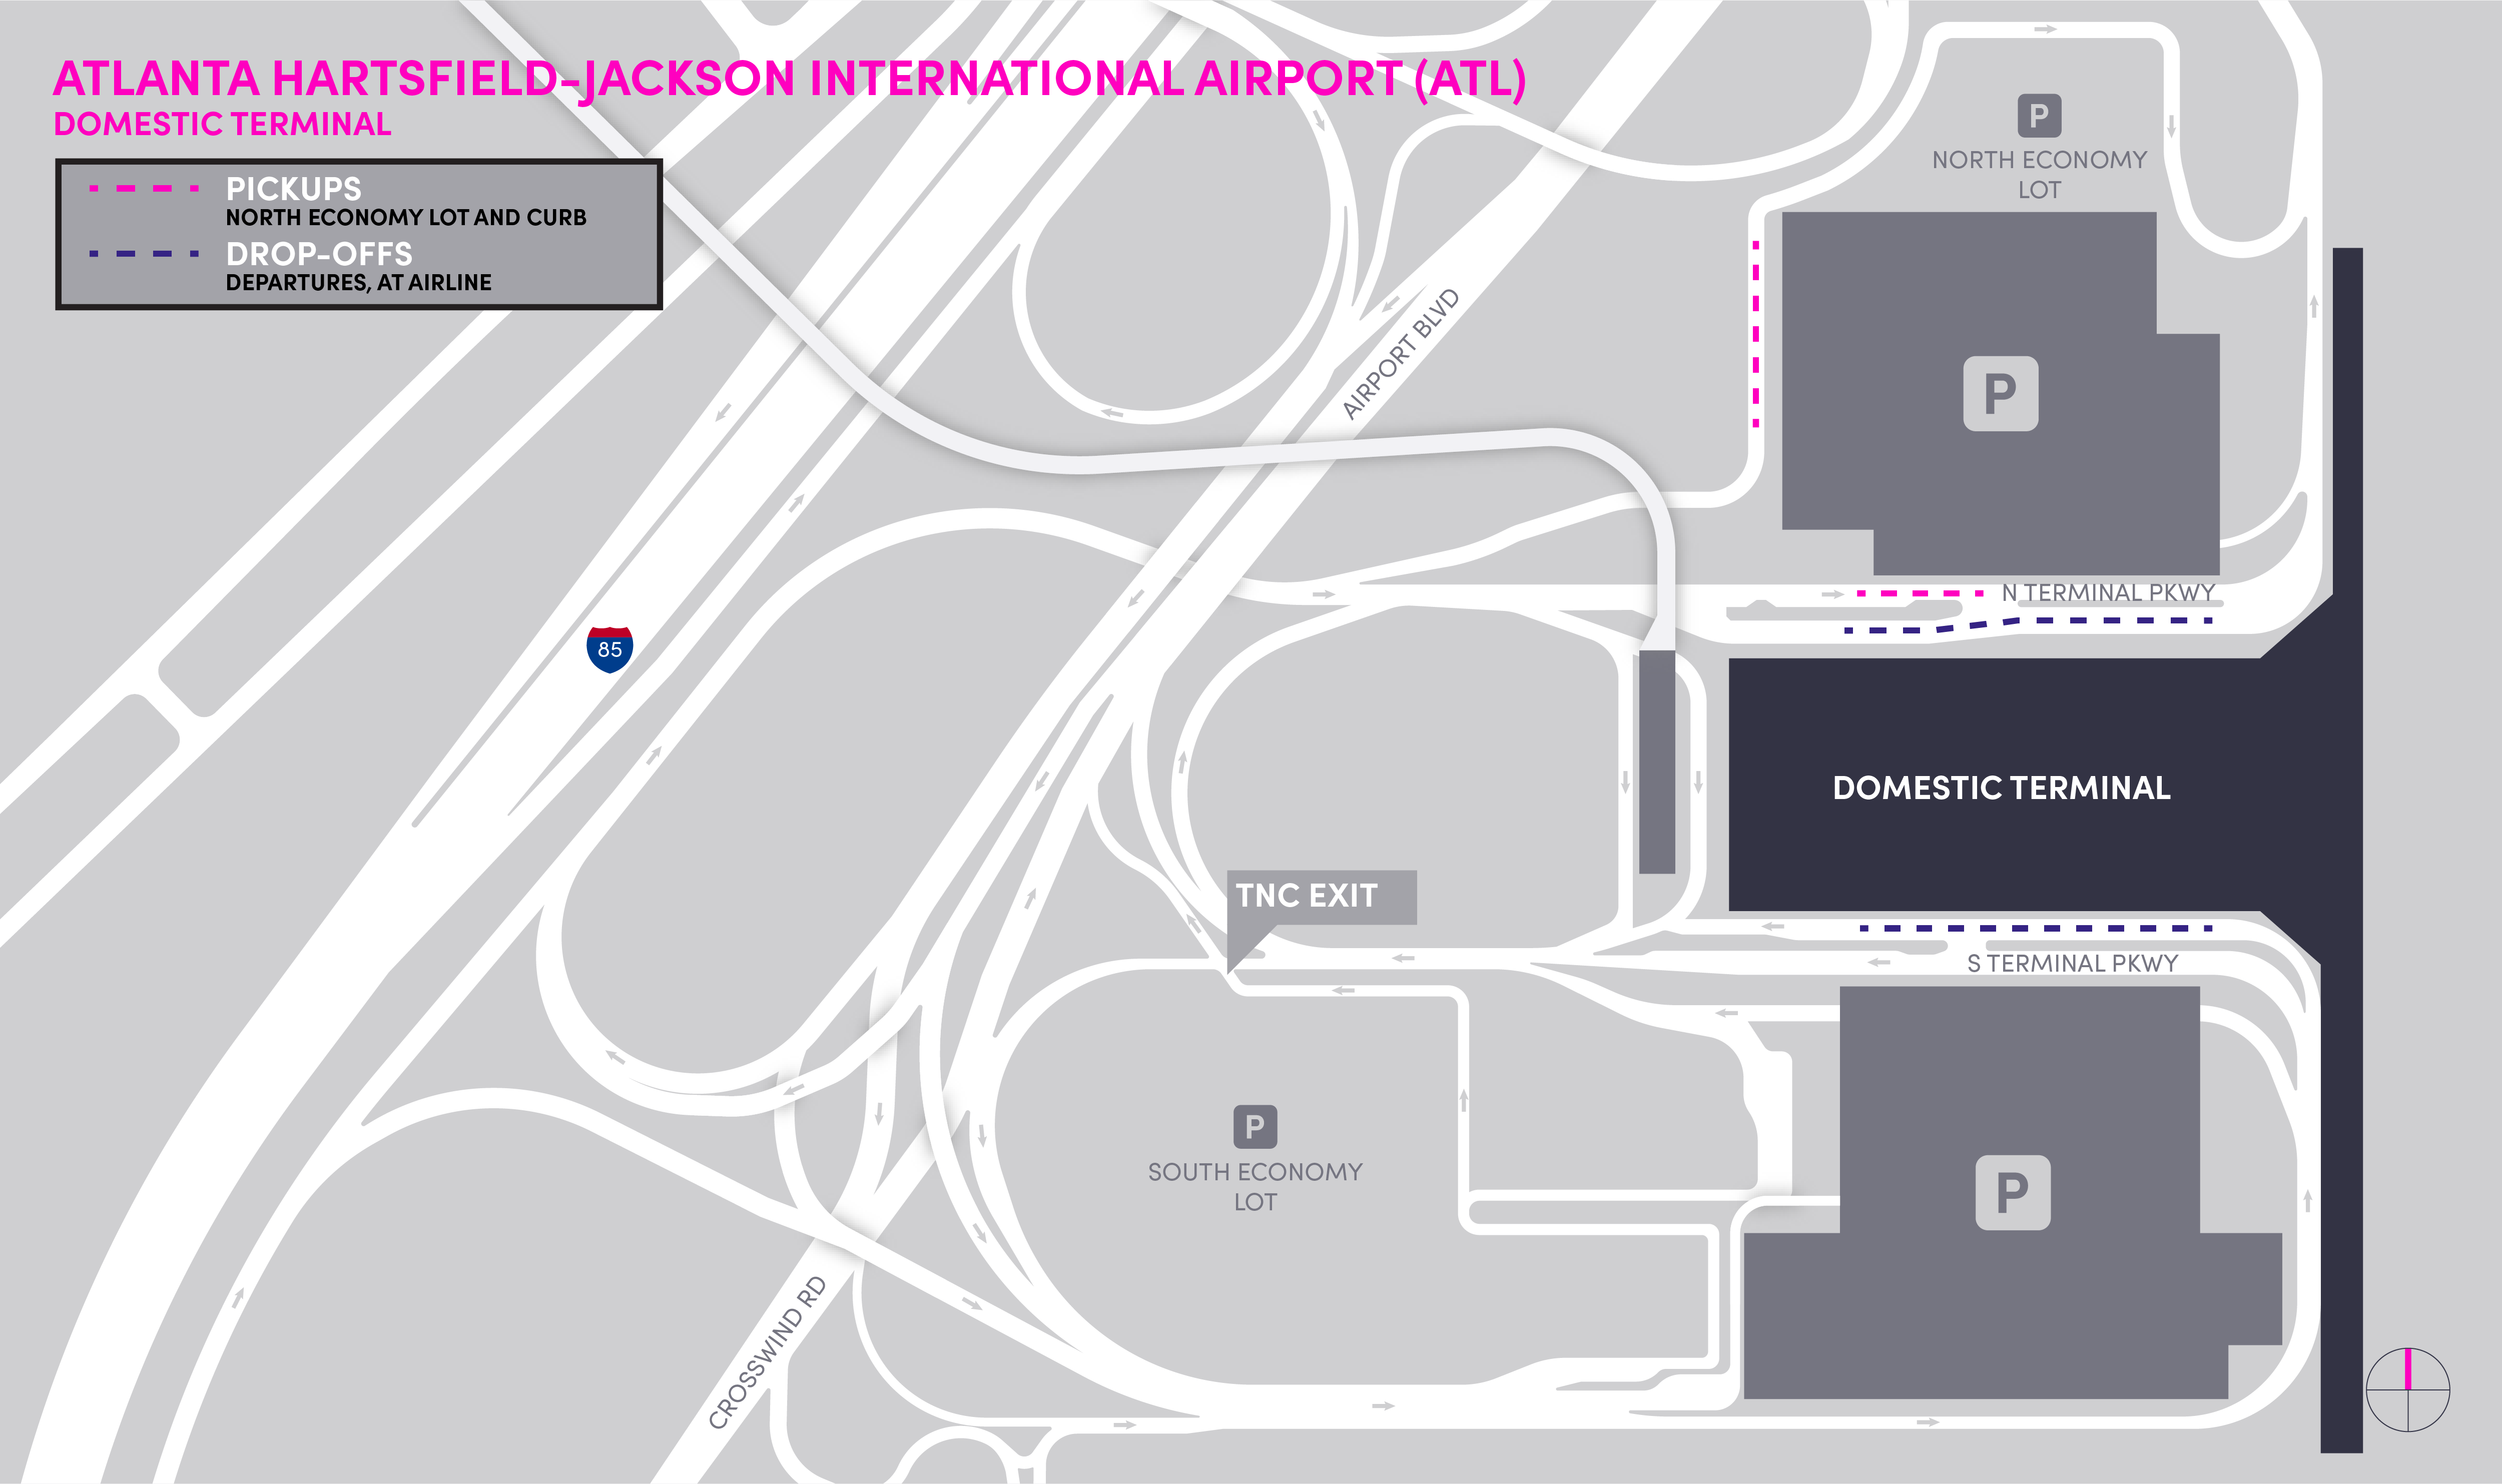 Mapa do Aeroporto Internacional Atlanta Hartsfield-Jackson (ATL) detalhando os locais de embarque e desembarque.